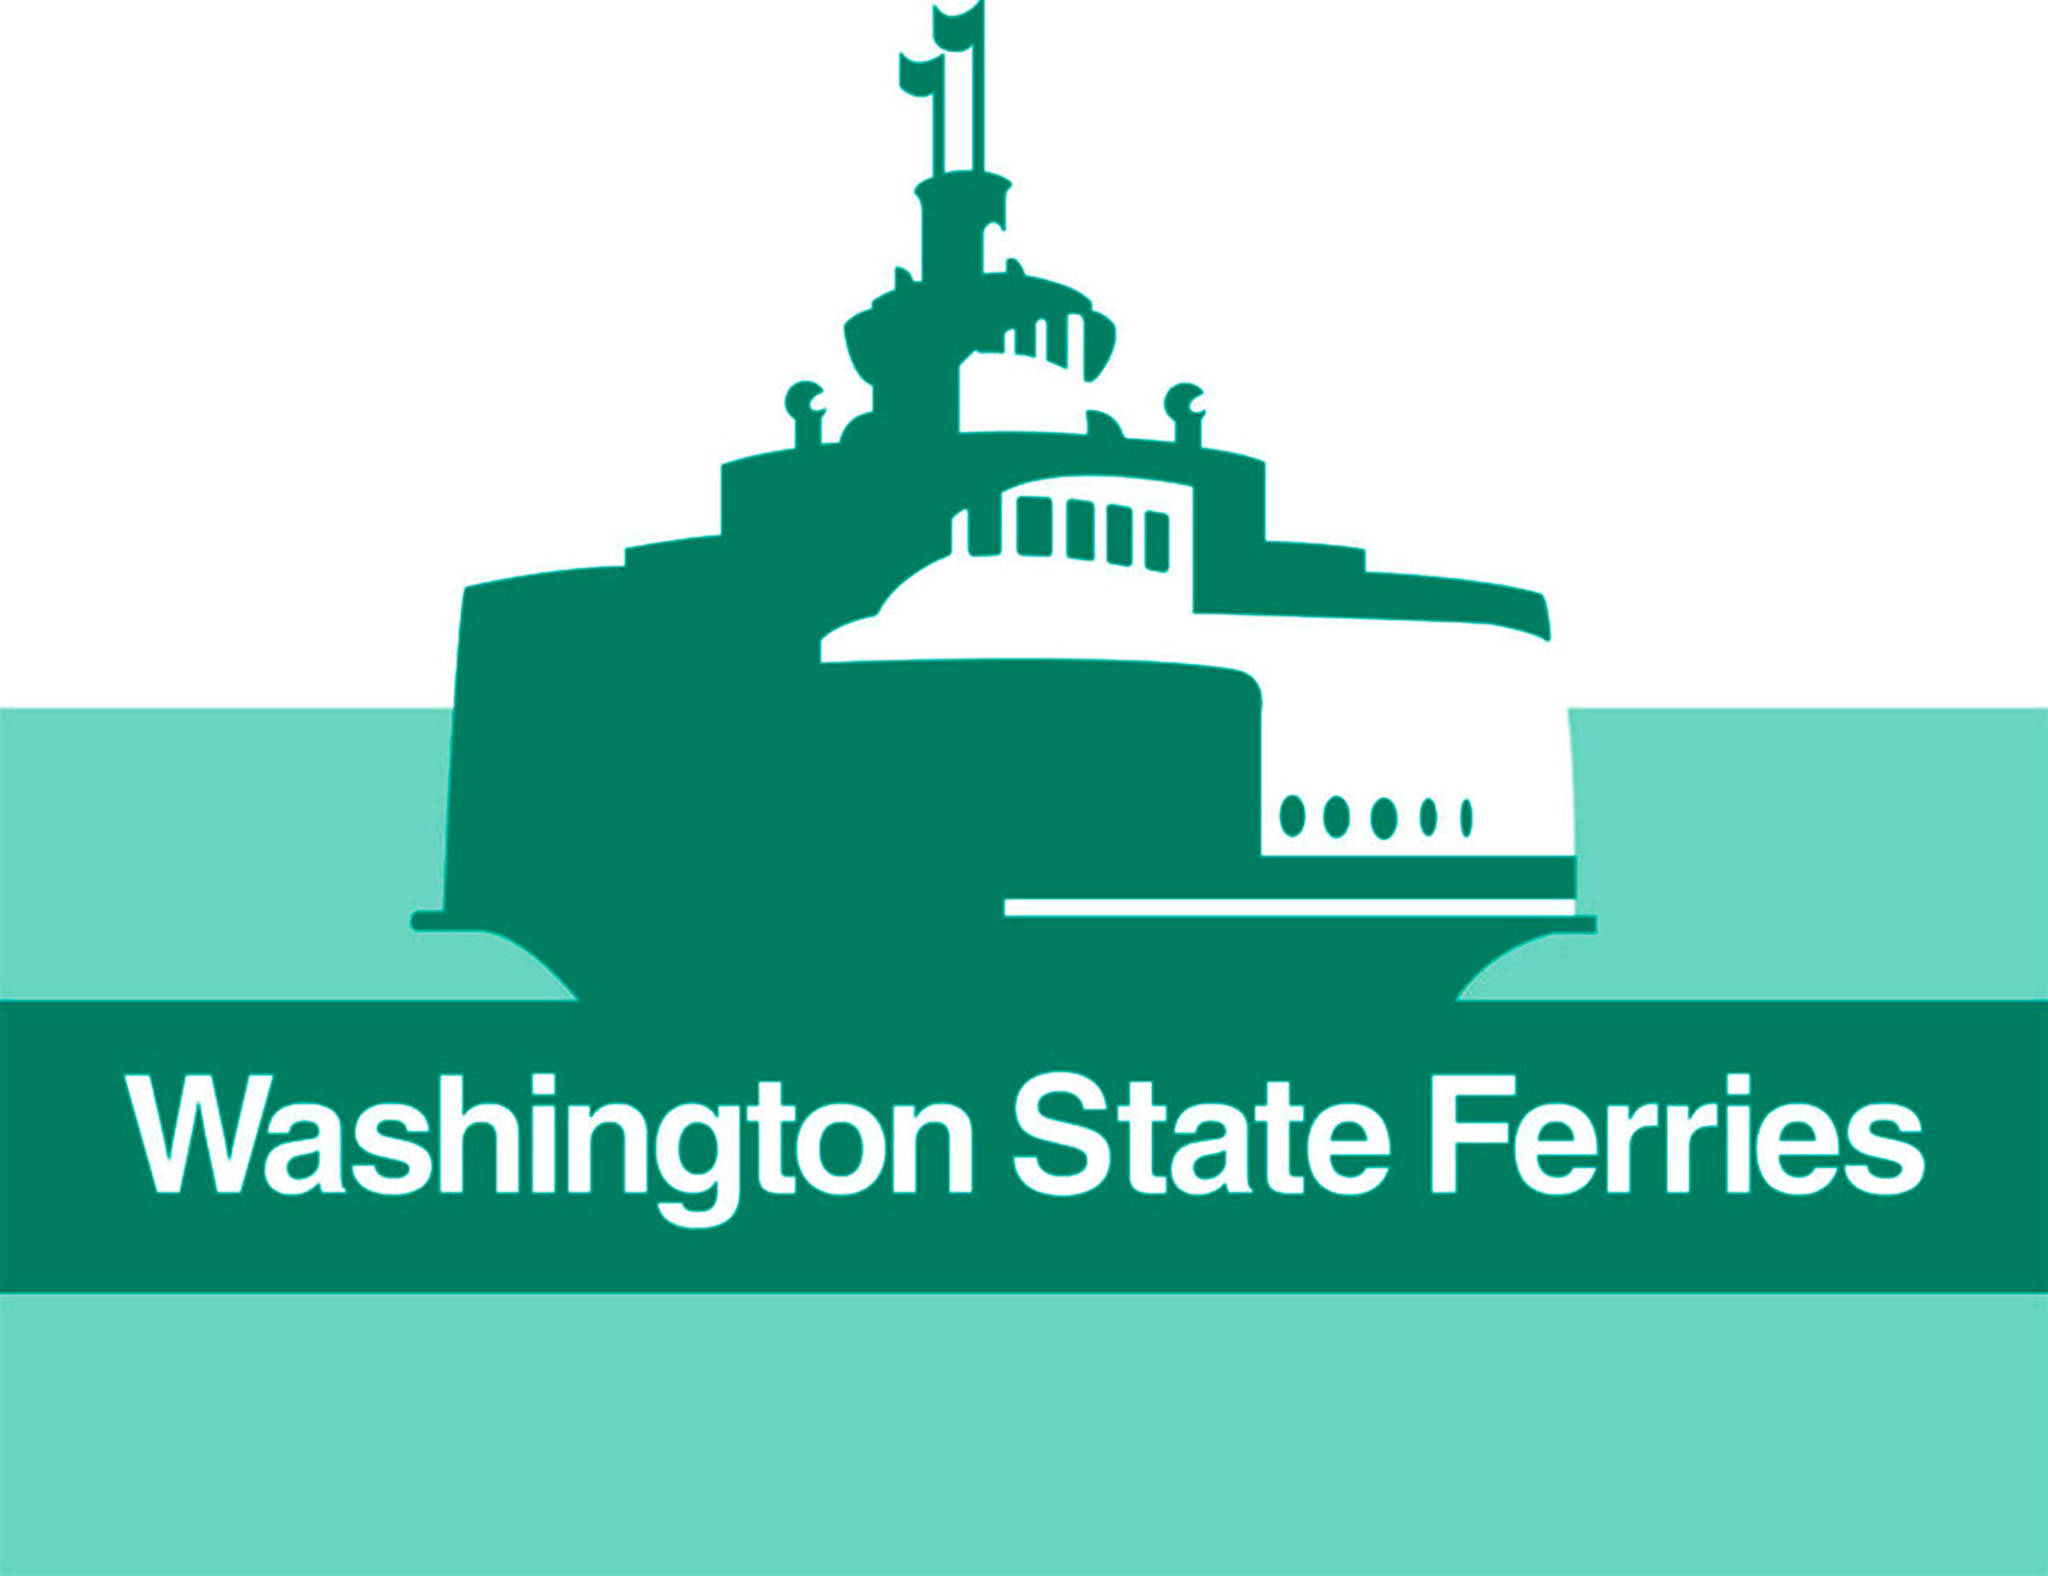 Washington State Ferries sets sail on new summer service plan